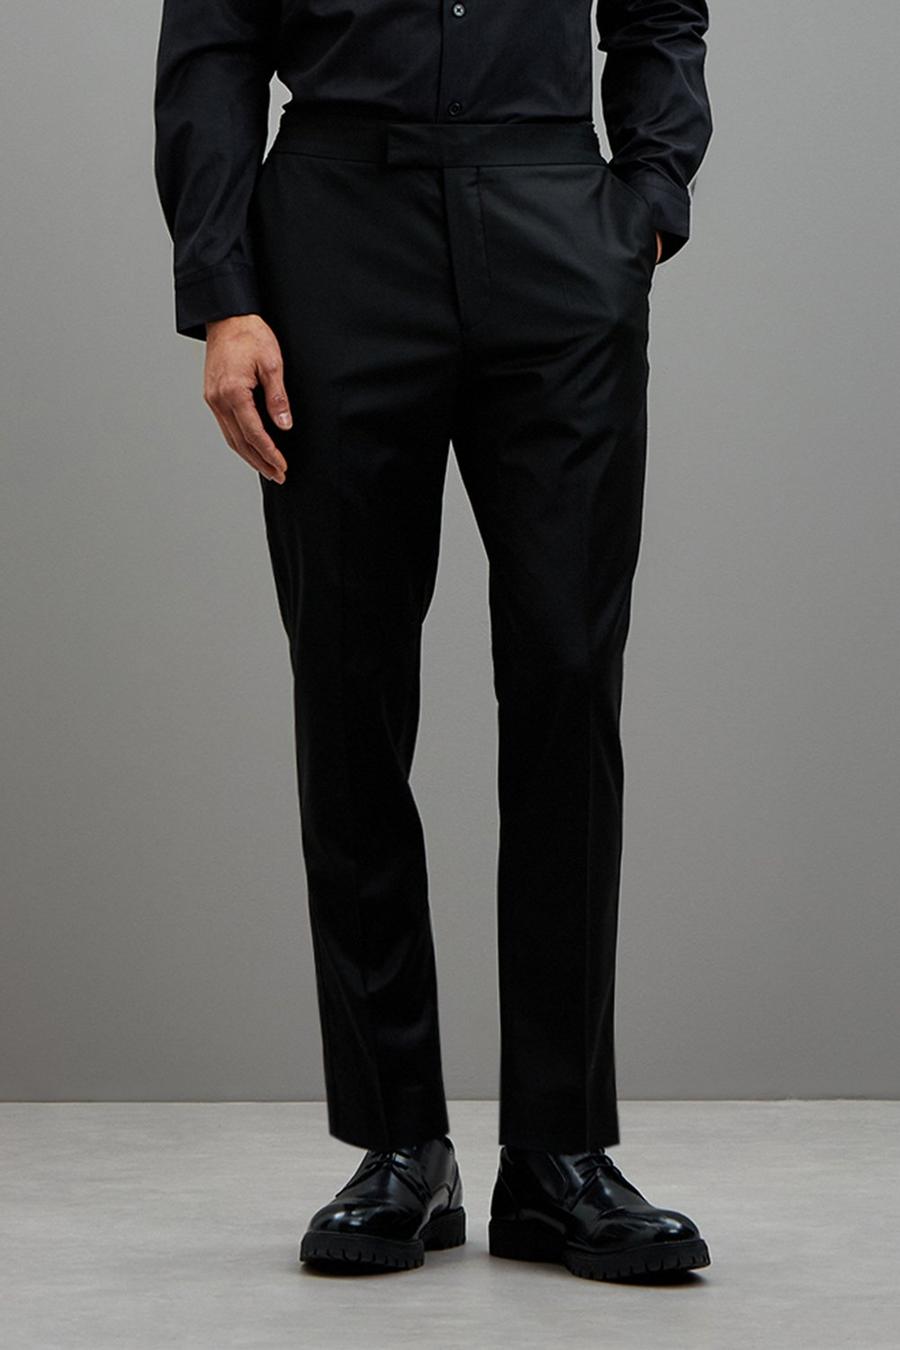 194 Slim Fit Black Premium Tux Suit Trousers